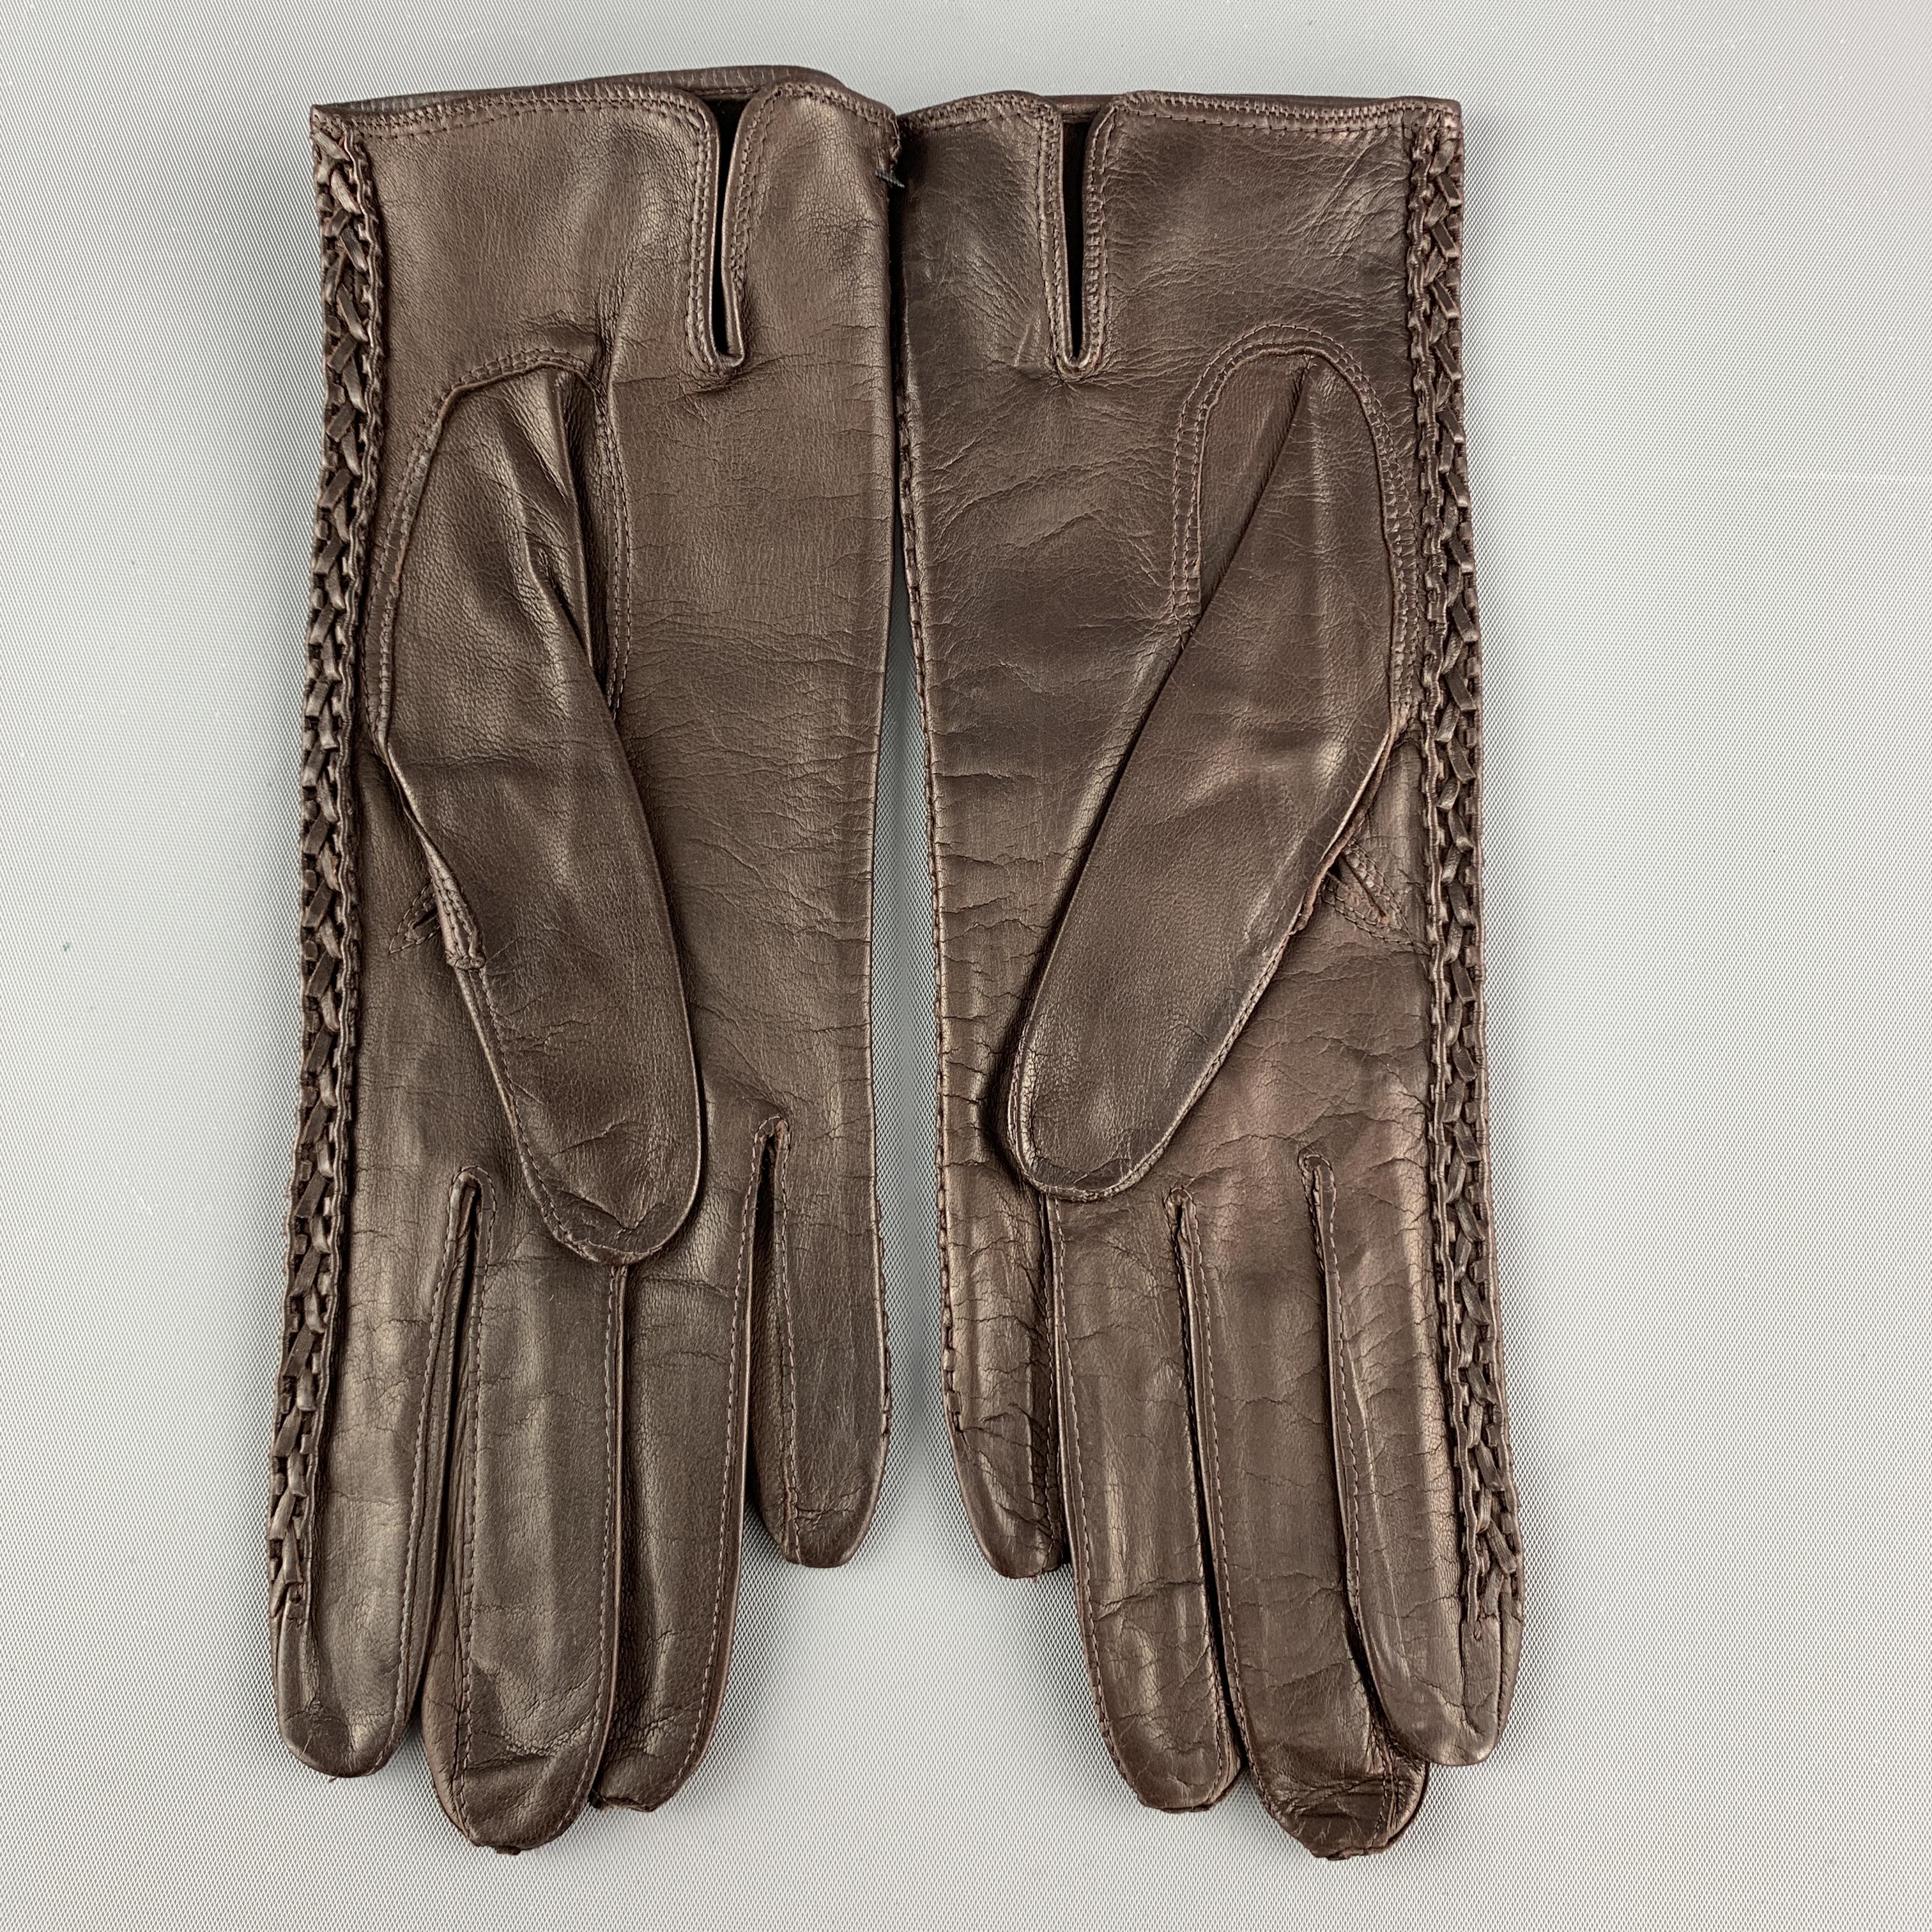 madova gloves